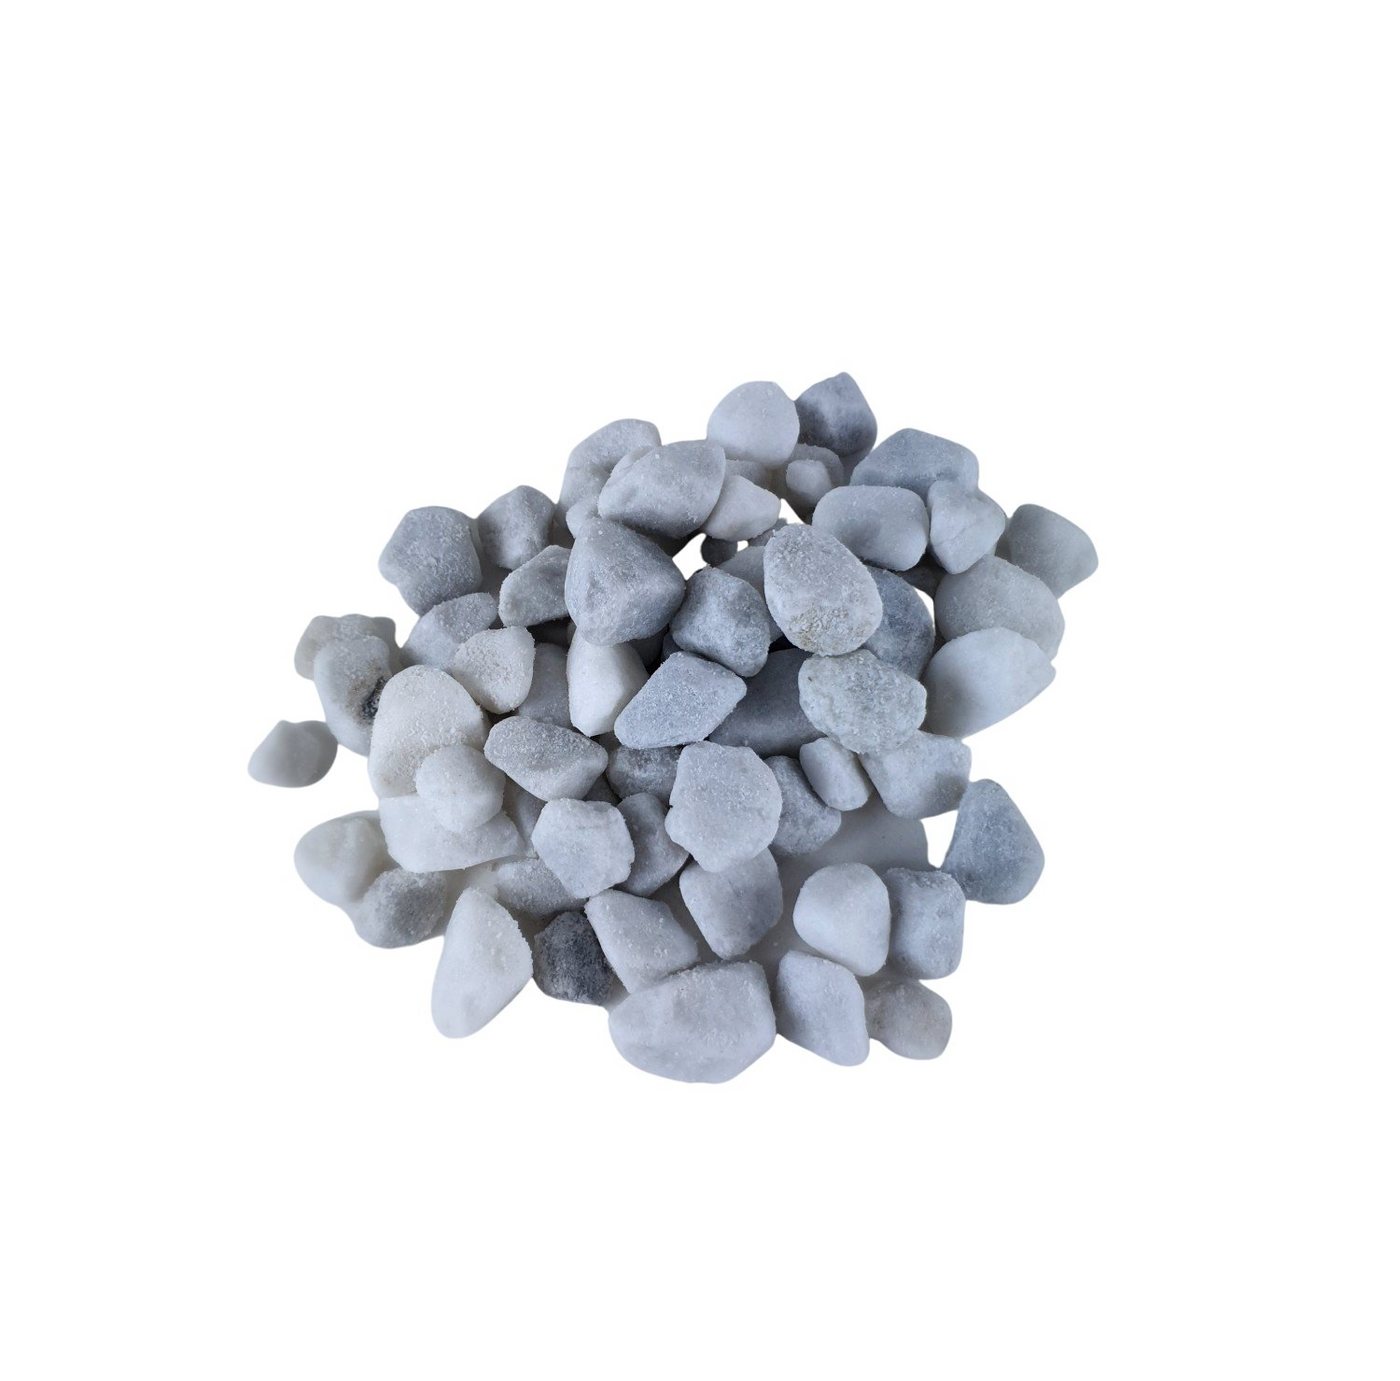 sesua Dekosteine Marmorkies weiß Carrara Kies 2 kg Körnung 15 - 25 mm von sesua